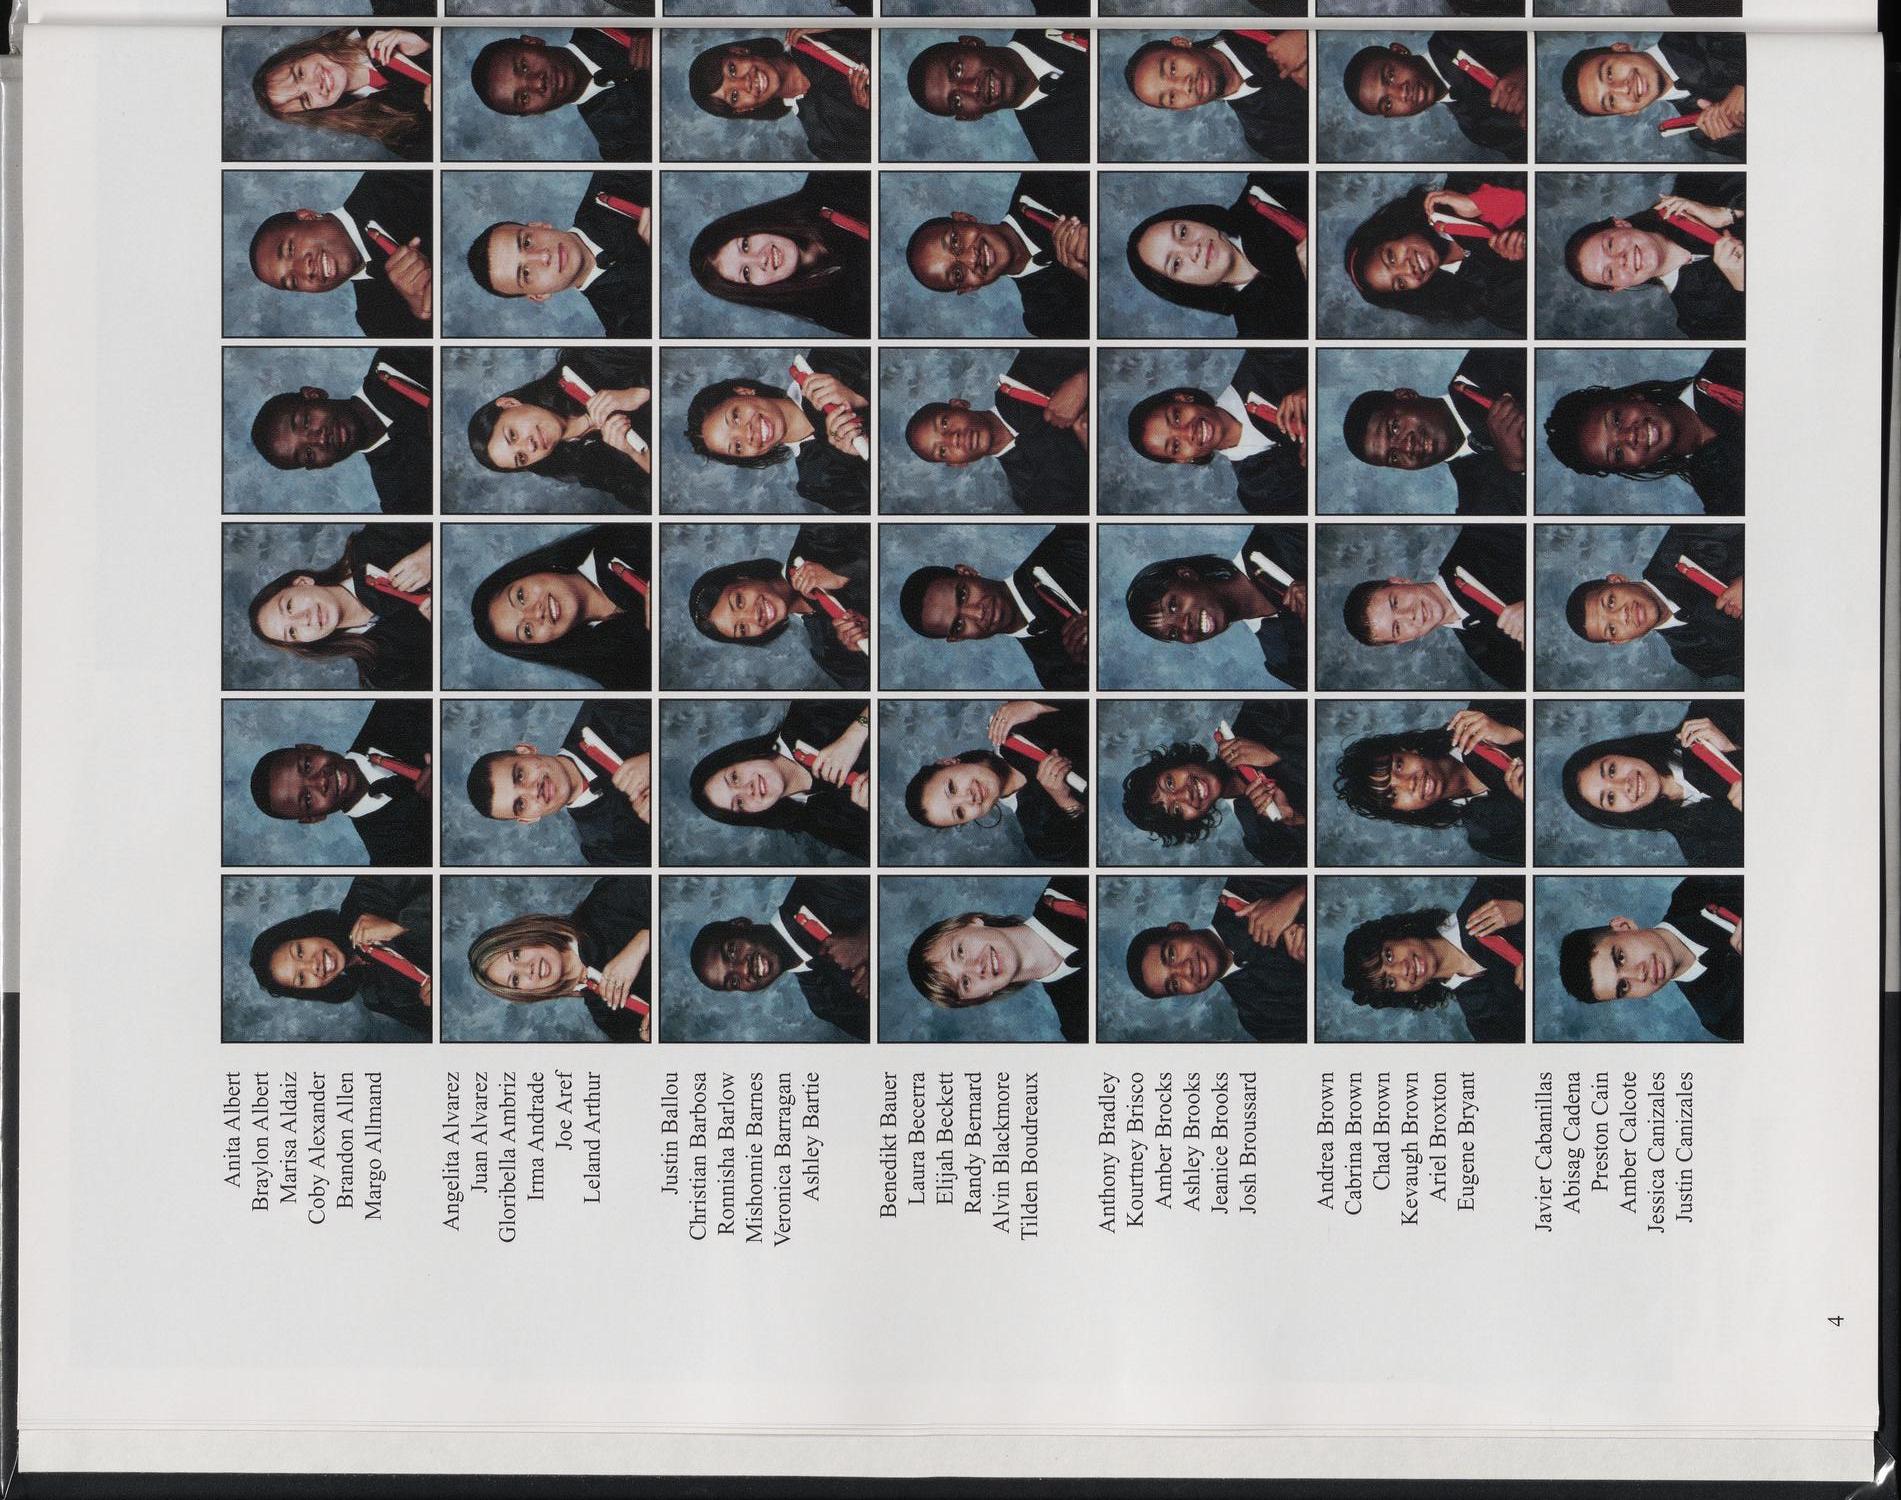 Titanium, Yearbook of Memorial High School, 2004
                                                
                                                    4
                                                